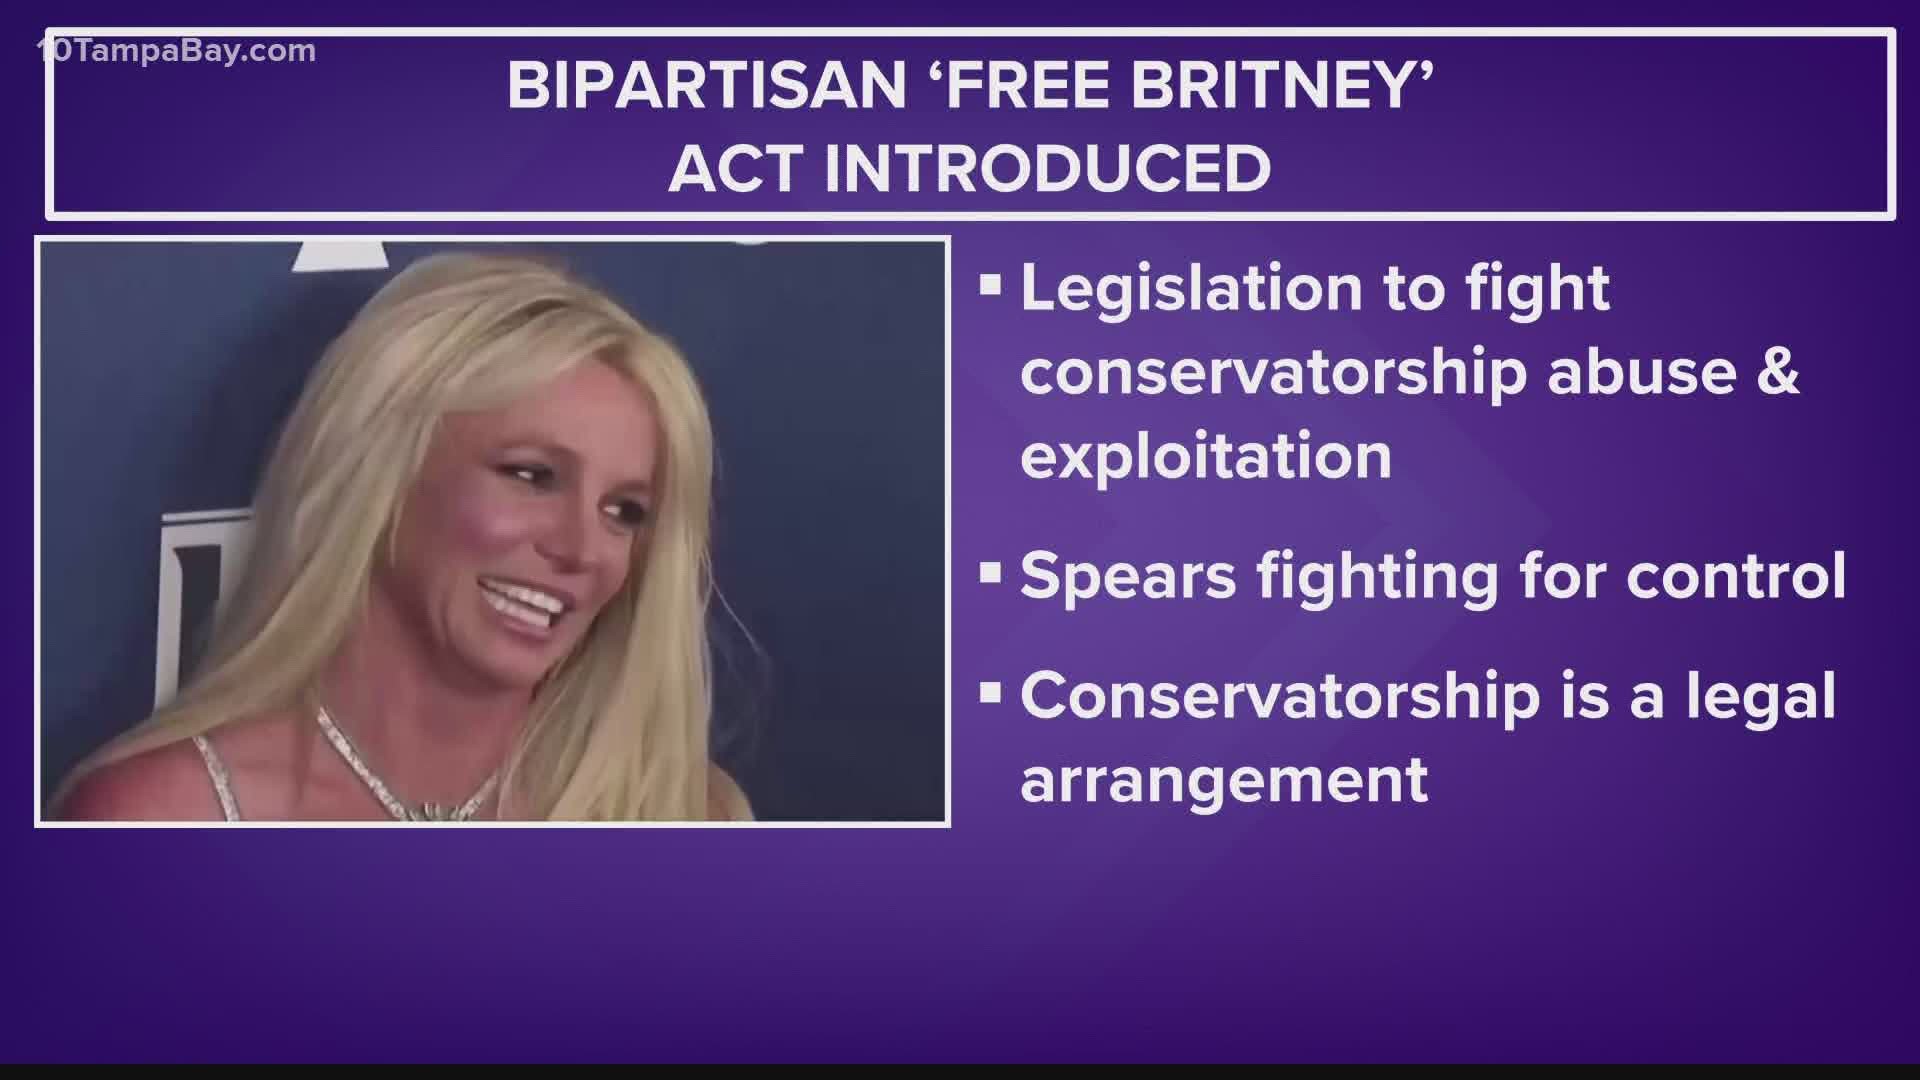 Britney Spears' conservatorship battle has prompted legislative action.